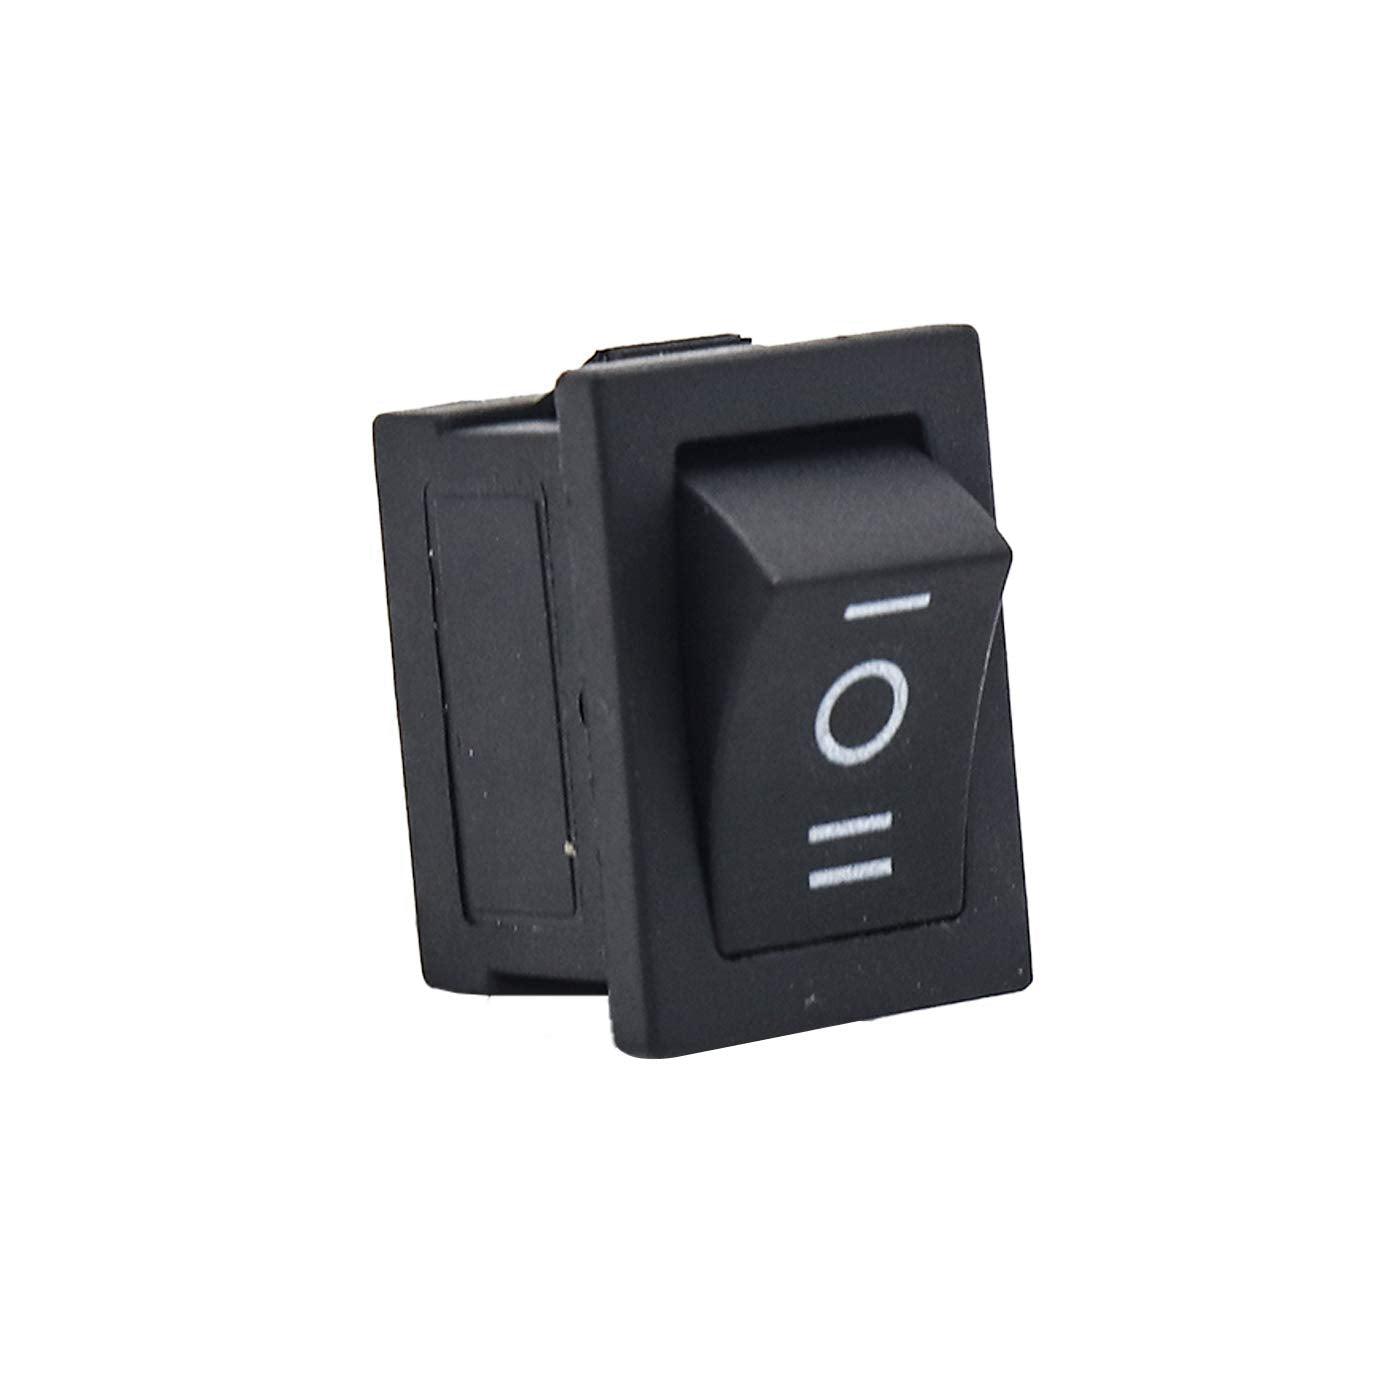 PATOYS | Pack of 1 Spdt On/Off/On Mini Black 3 Pin Rocker Switch Ac 6A /250V 10A /125V Switches PATOYS